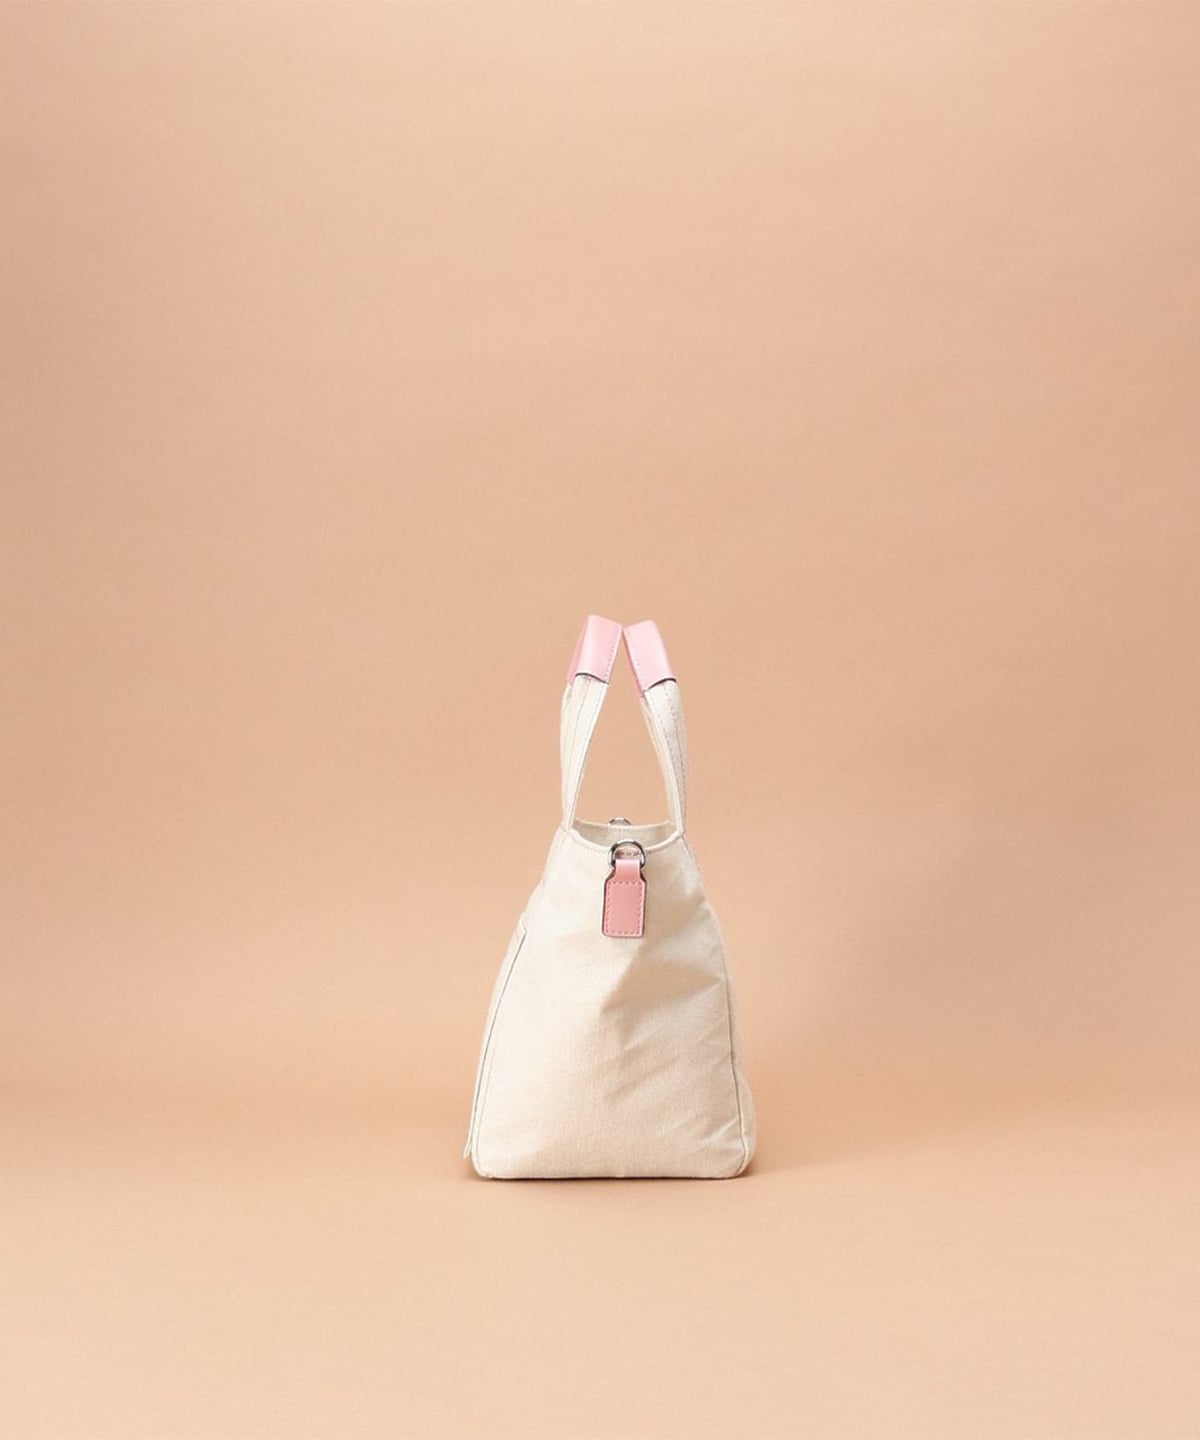 Dream bag for キャンバストートⅡ 小サイズ(FREE ピンク): Samantha 